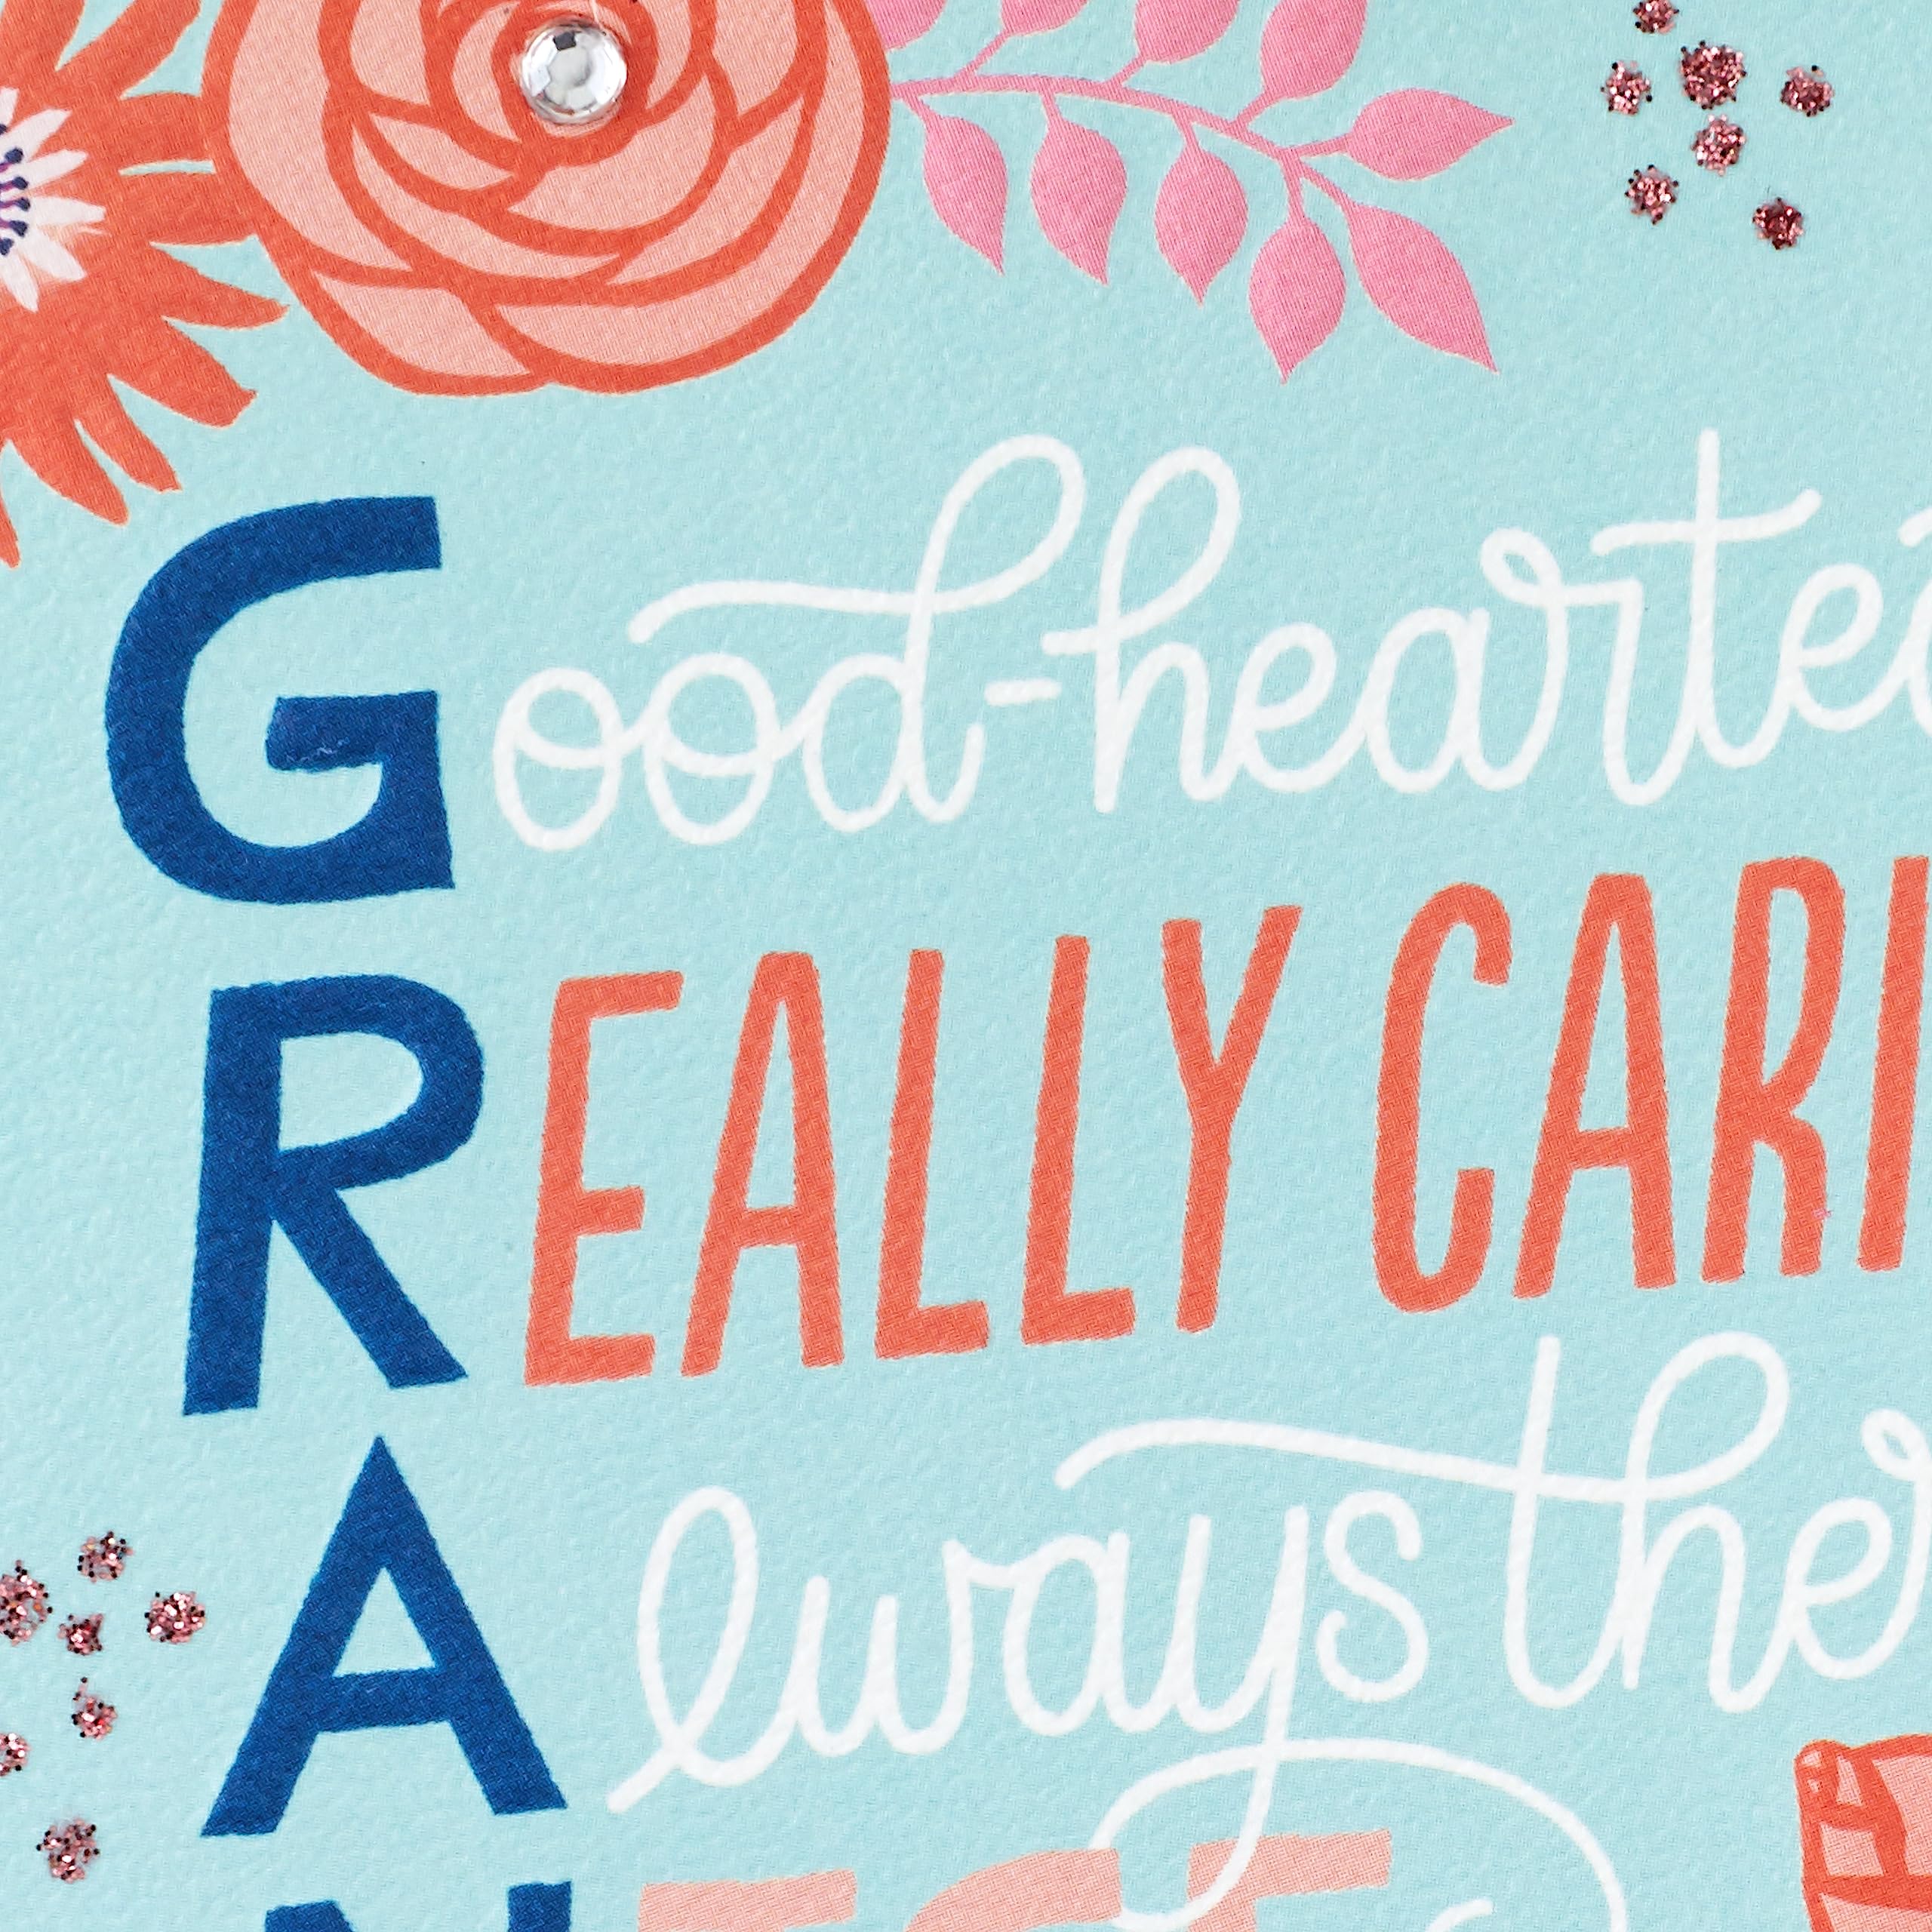 Hallmark Card for Grandma (Good-hearted) for Grandparent's Day, Birthdays, Valentine's Day